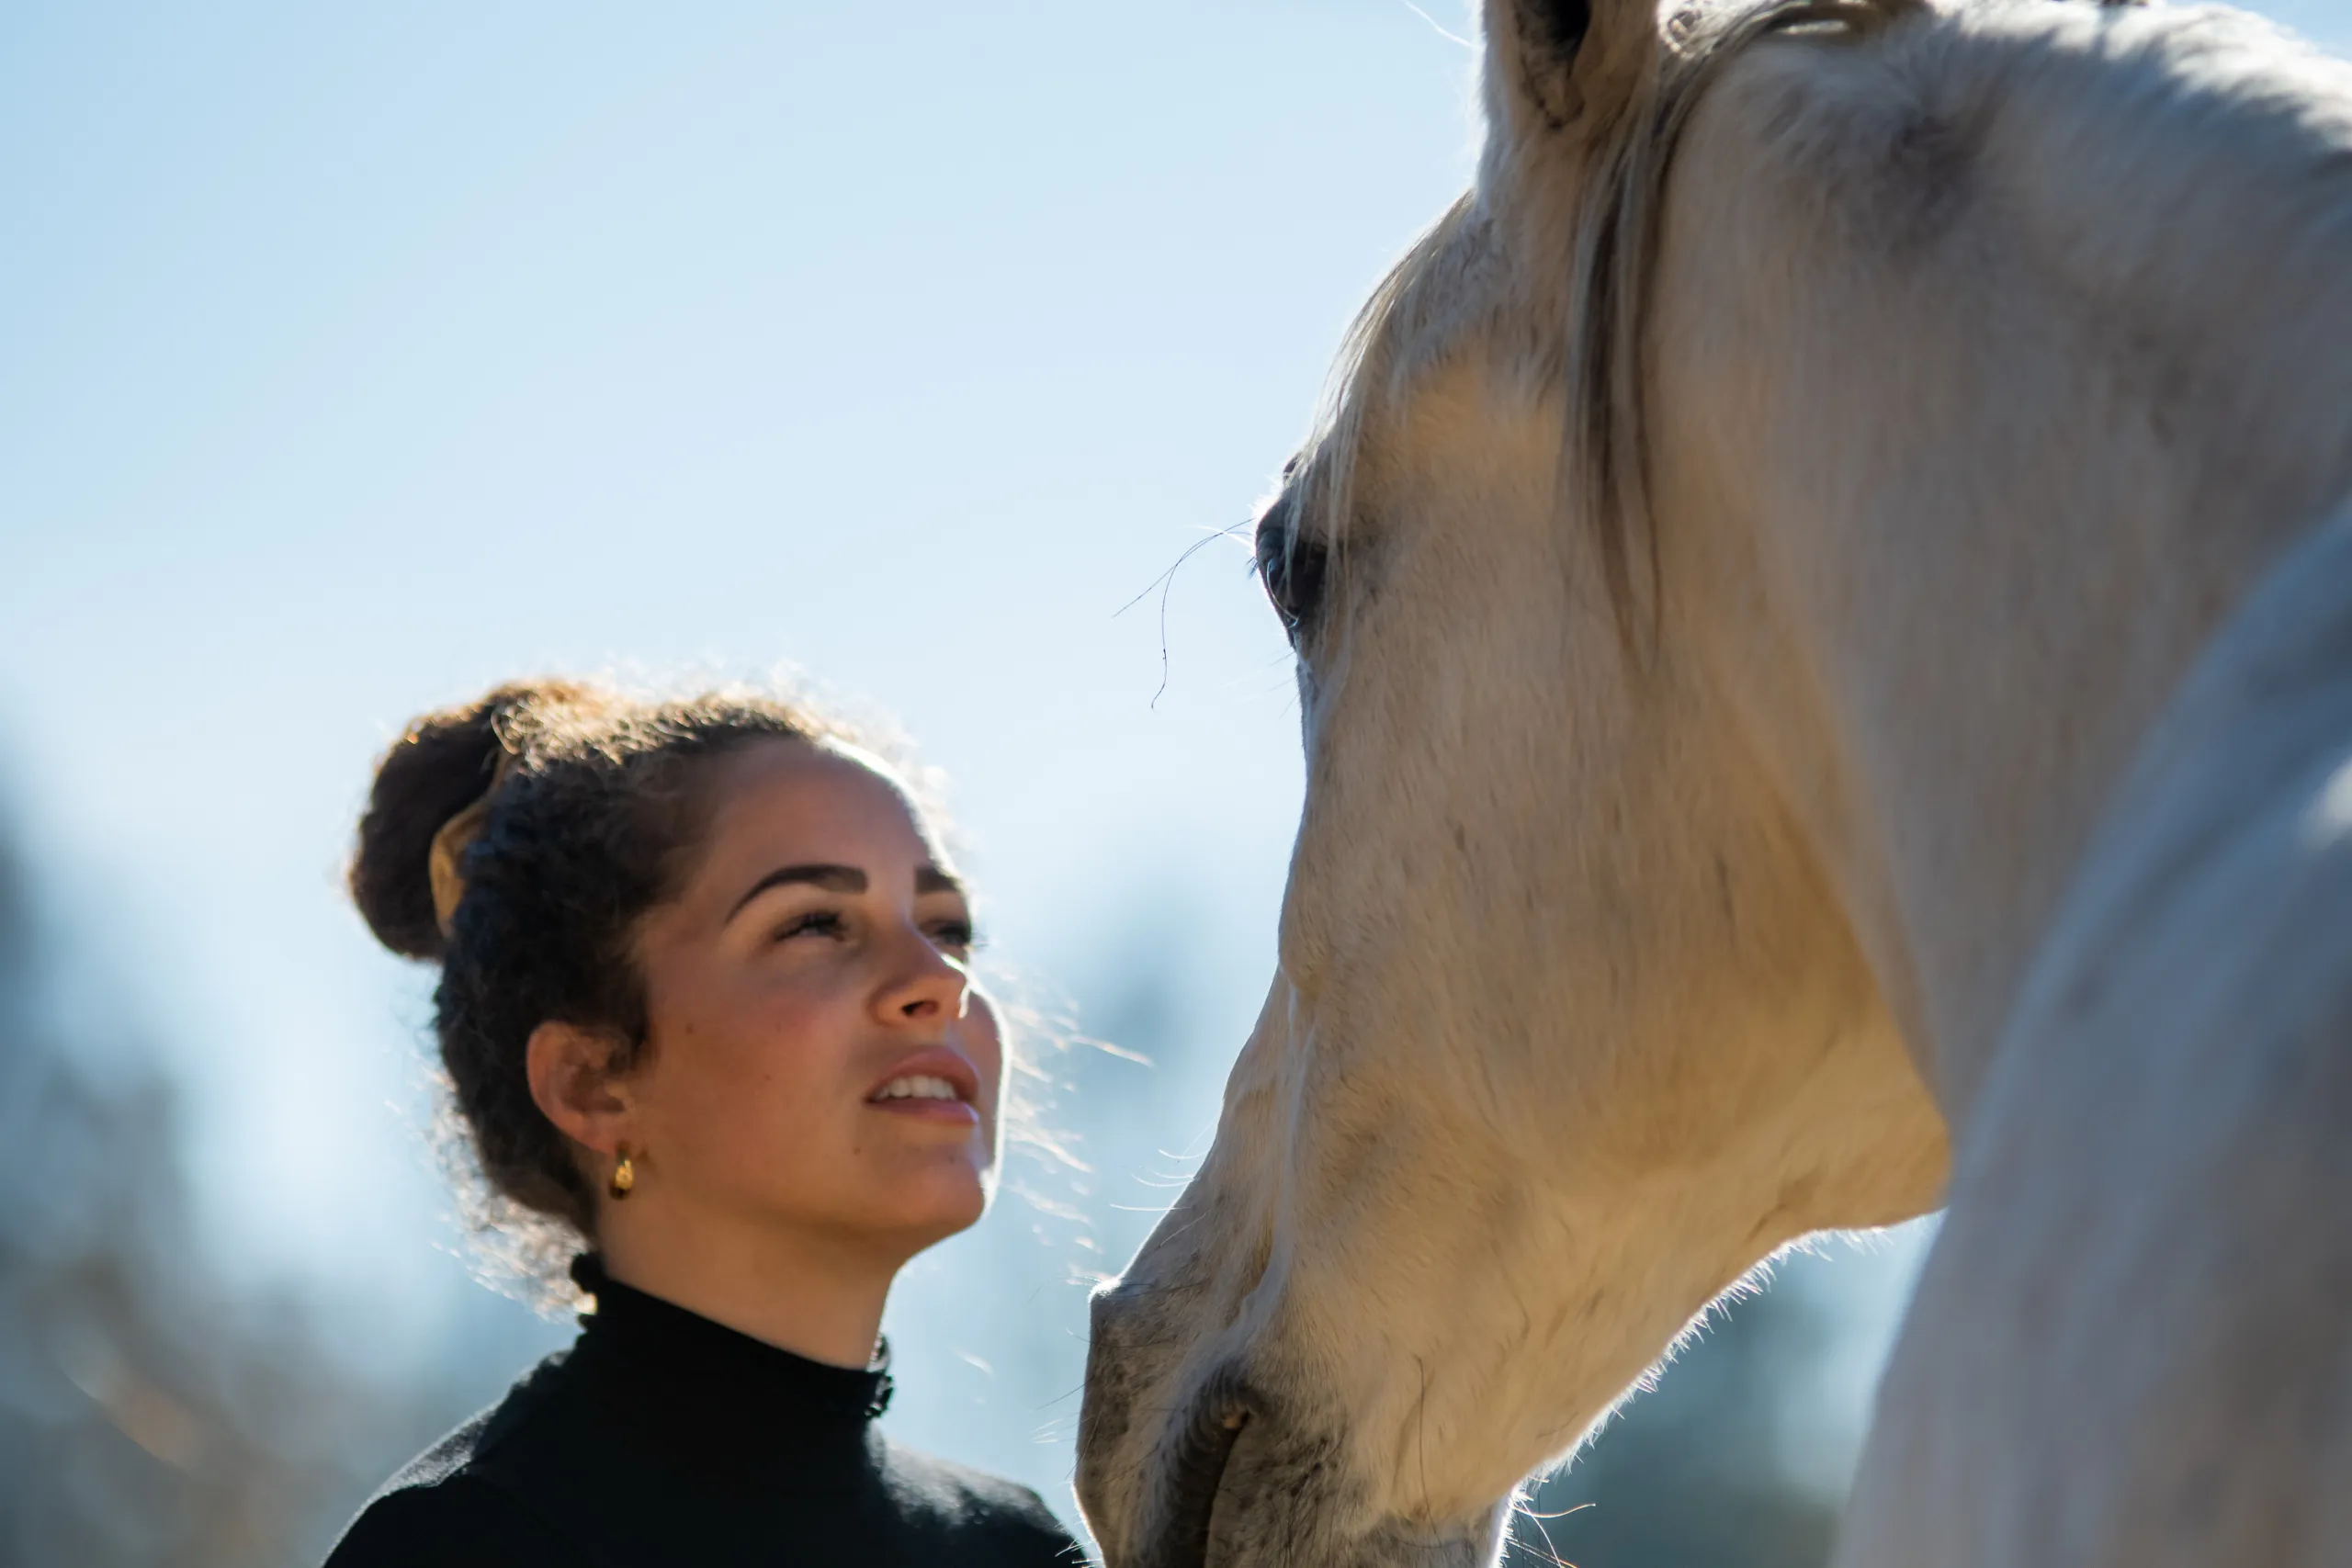 Horsemanship Vertrauensvolle Beziehung Pferd